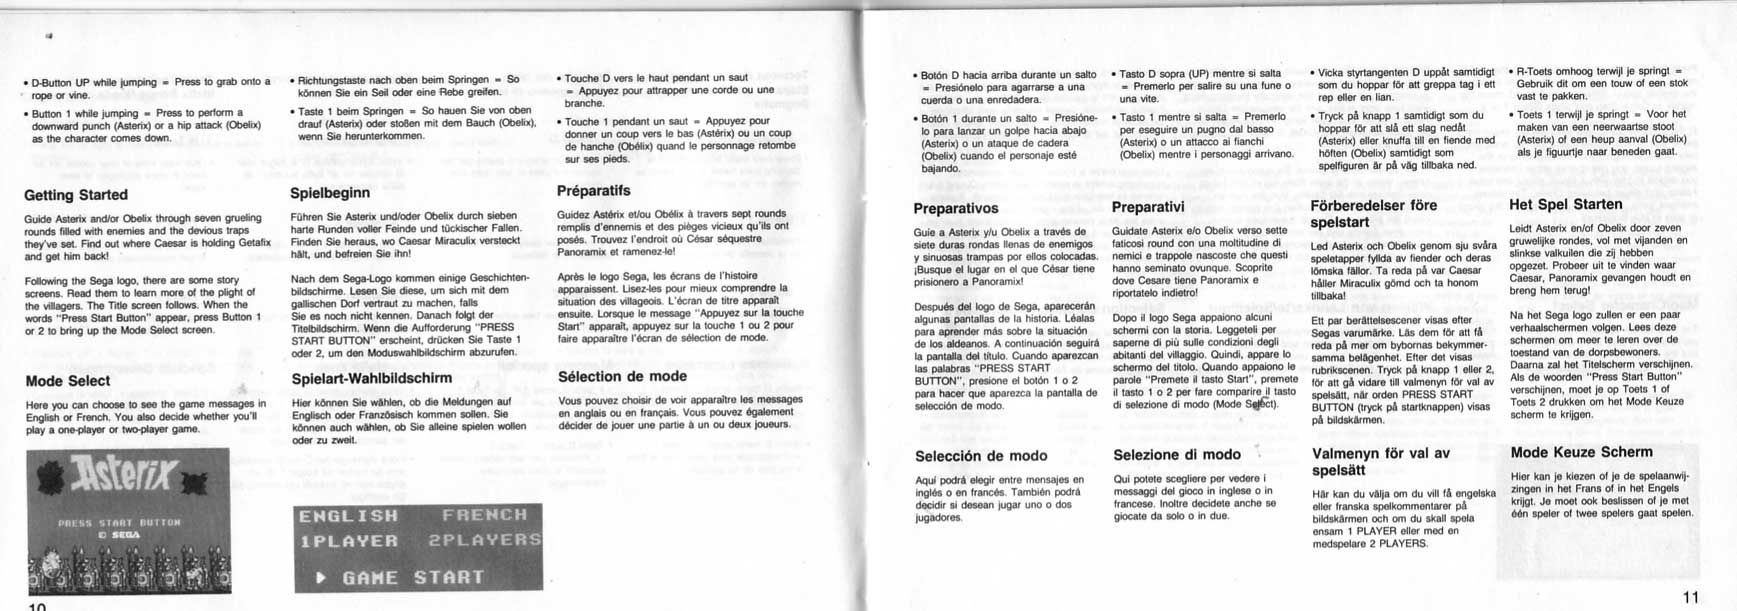 Astérix Jeux Master System Notice page 10-11